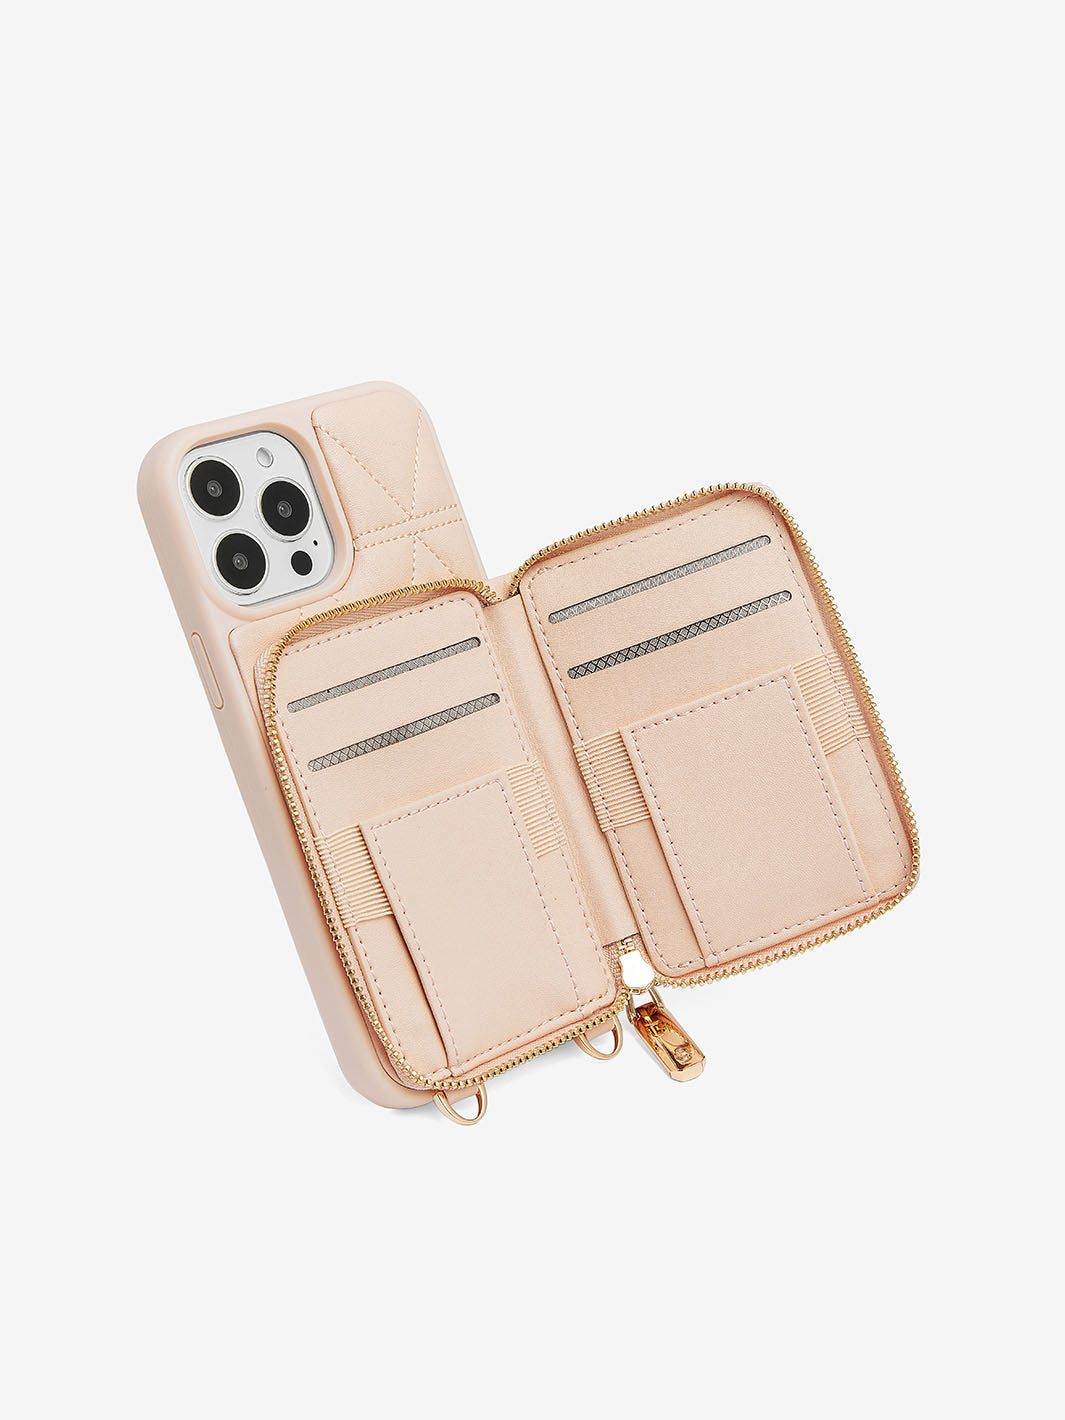 Custype Triangle-Argyle iPhone crossbody case in pink-02